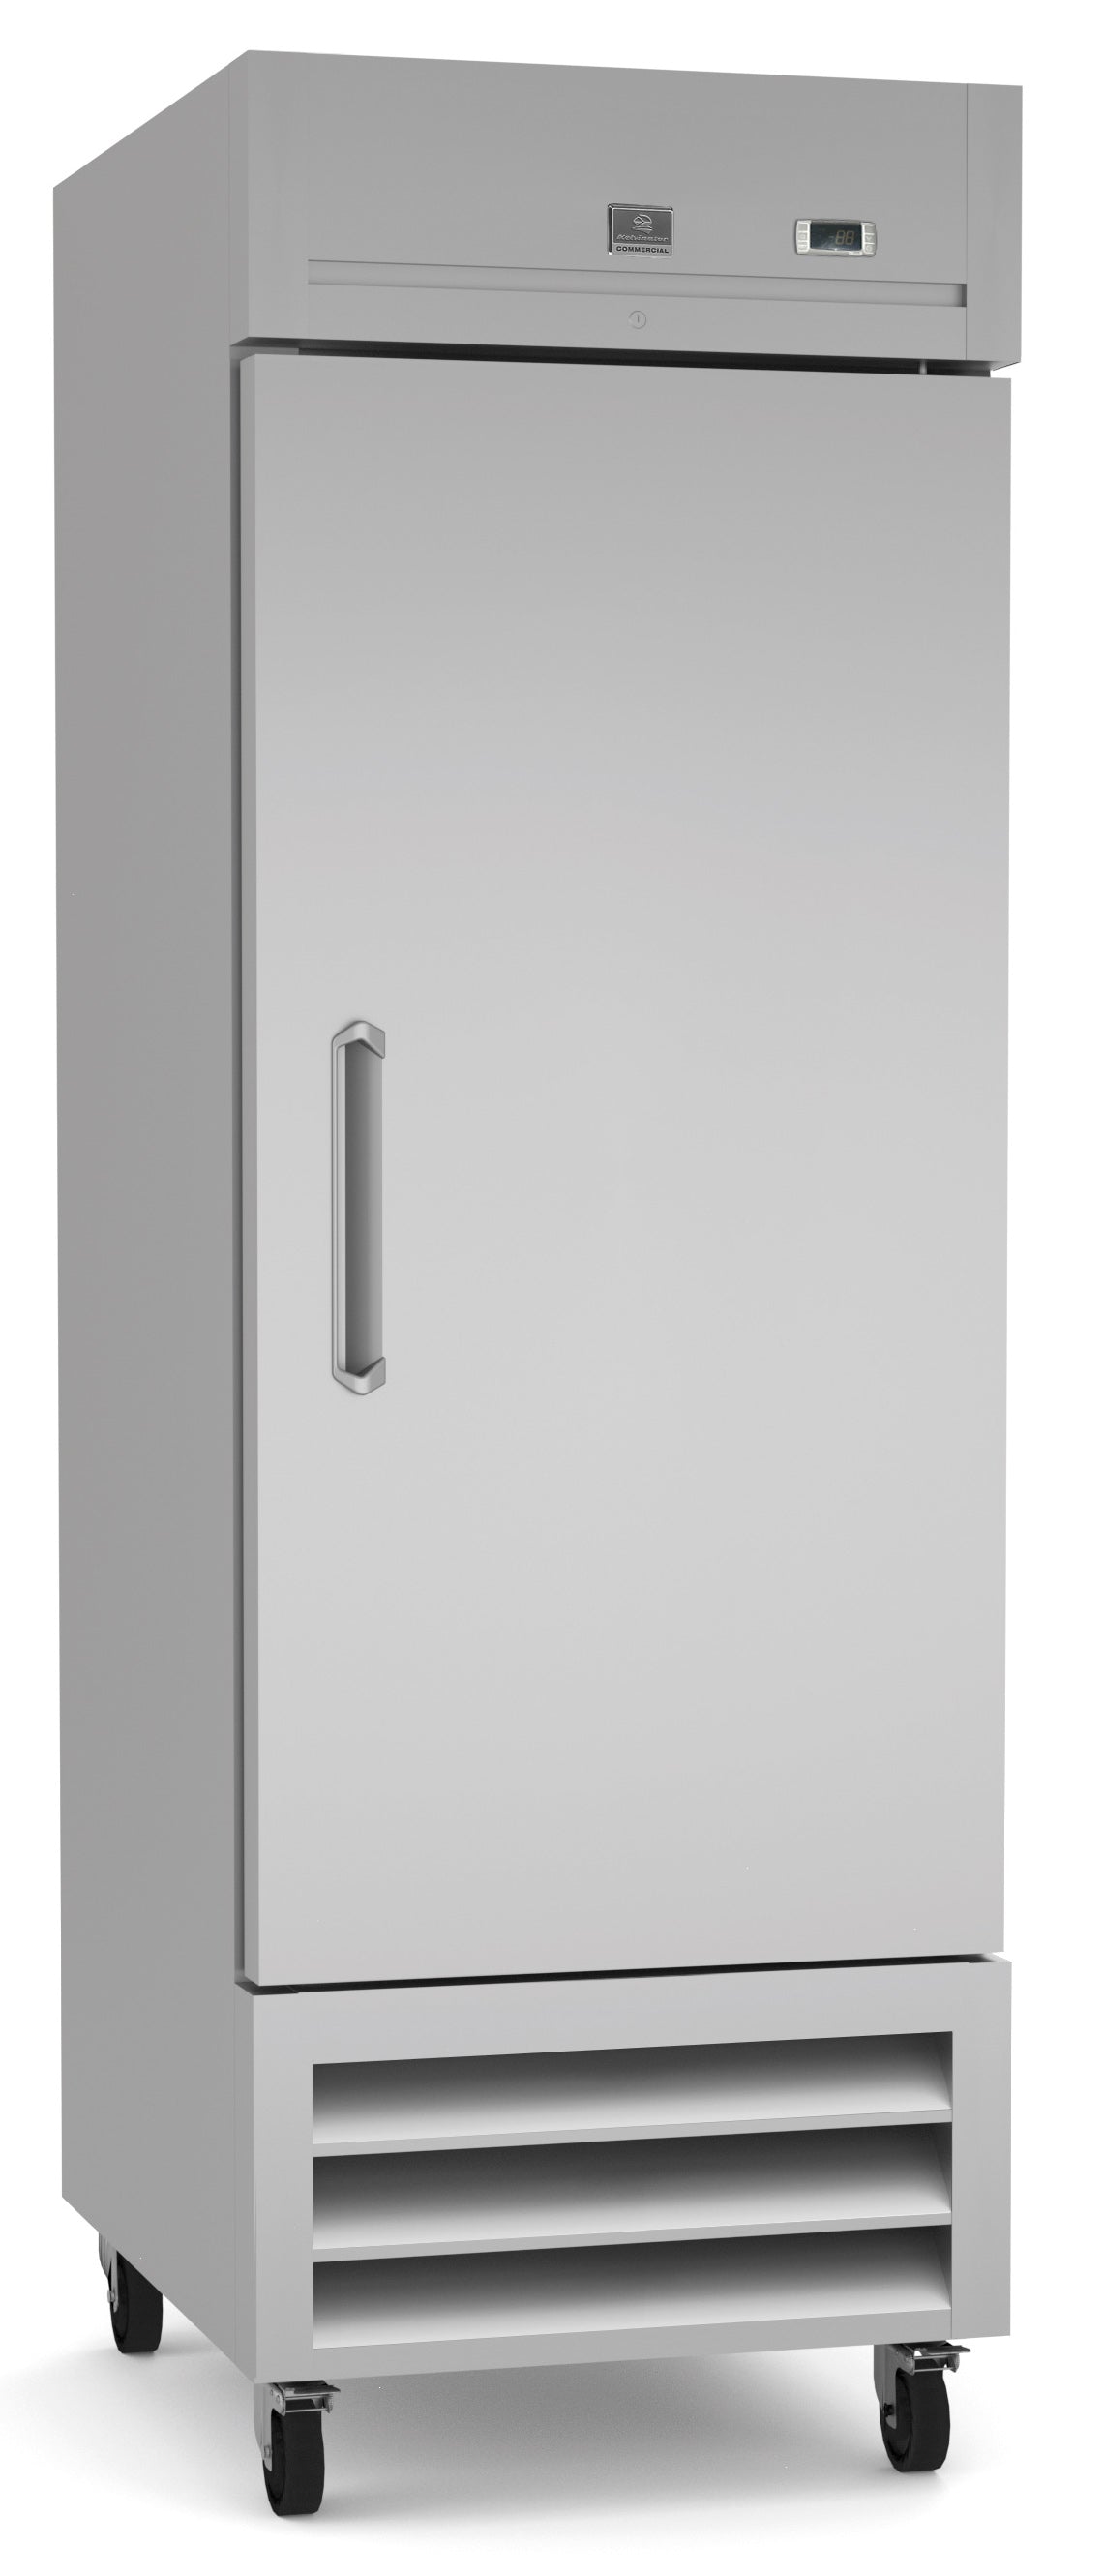 Reach-in Refrigerator Kelvinator Commercial Model KCHRI27R1DRE